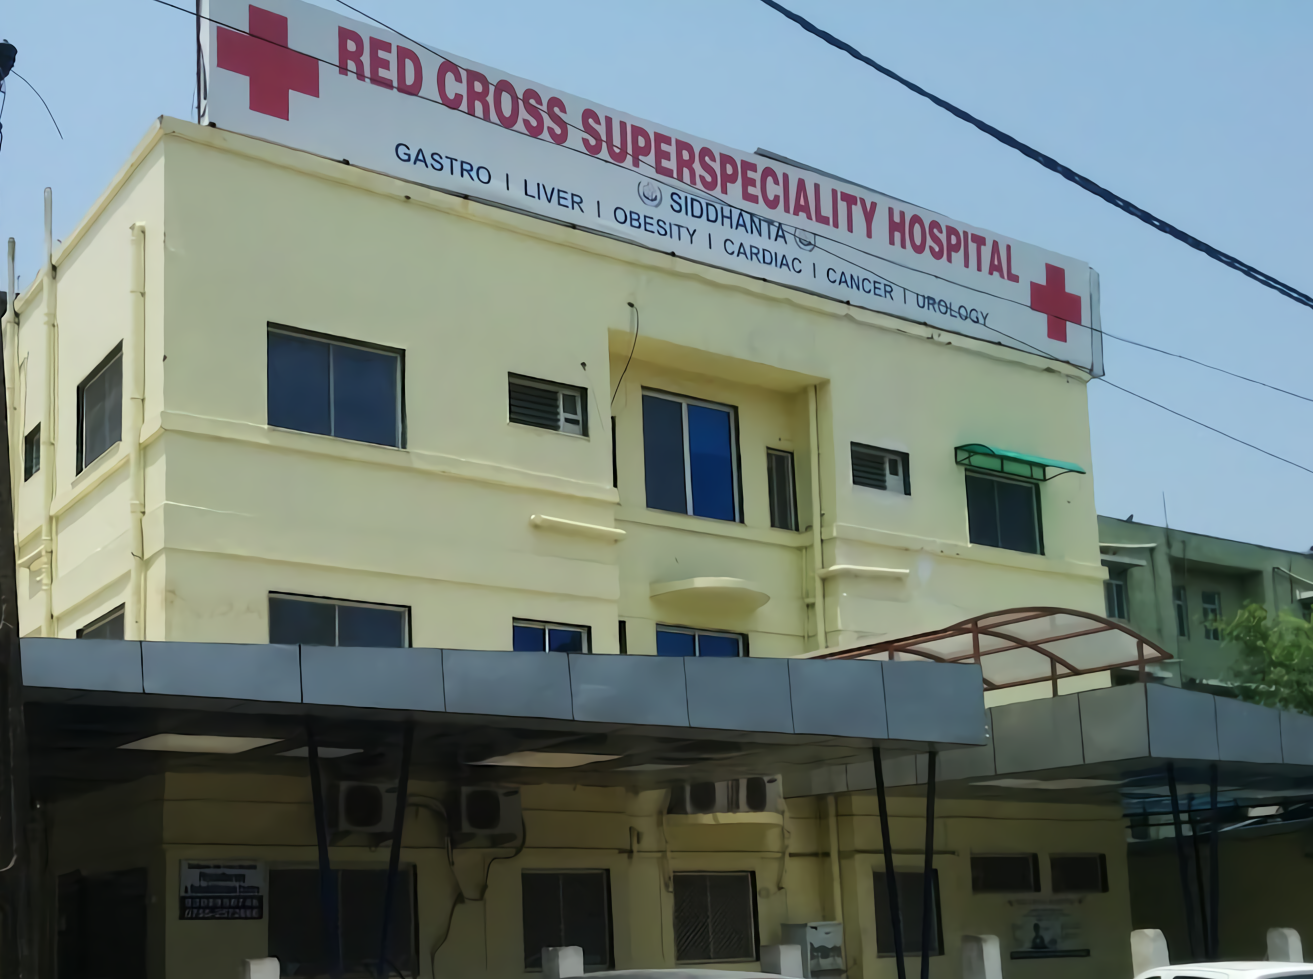 Siddhanta Red Cross Super Speciality Hospital